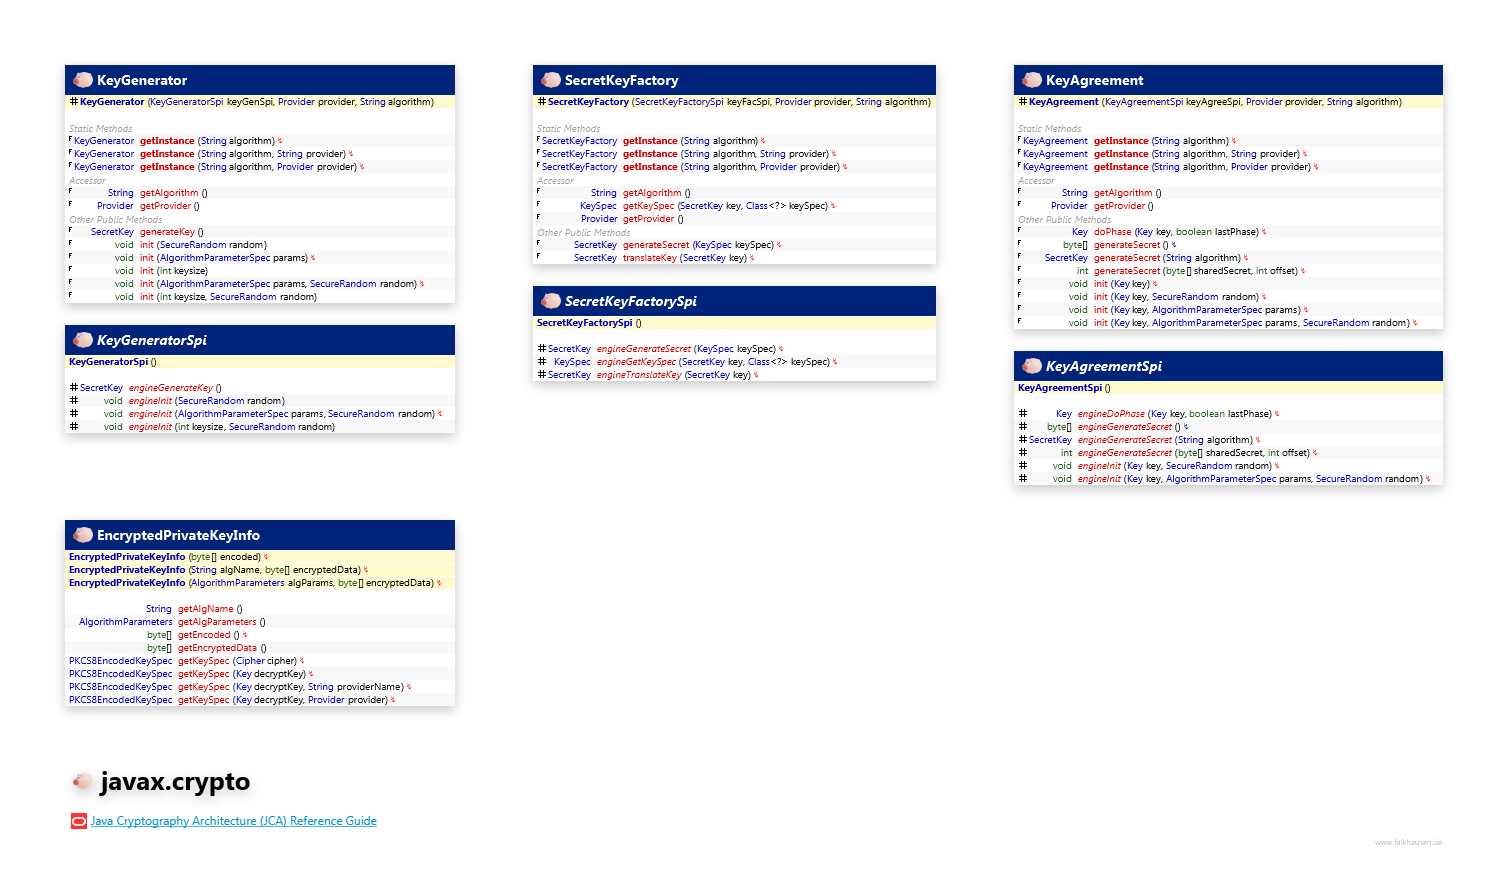 javax.crypto KeyManagement class diagram and api documentation for Java 8